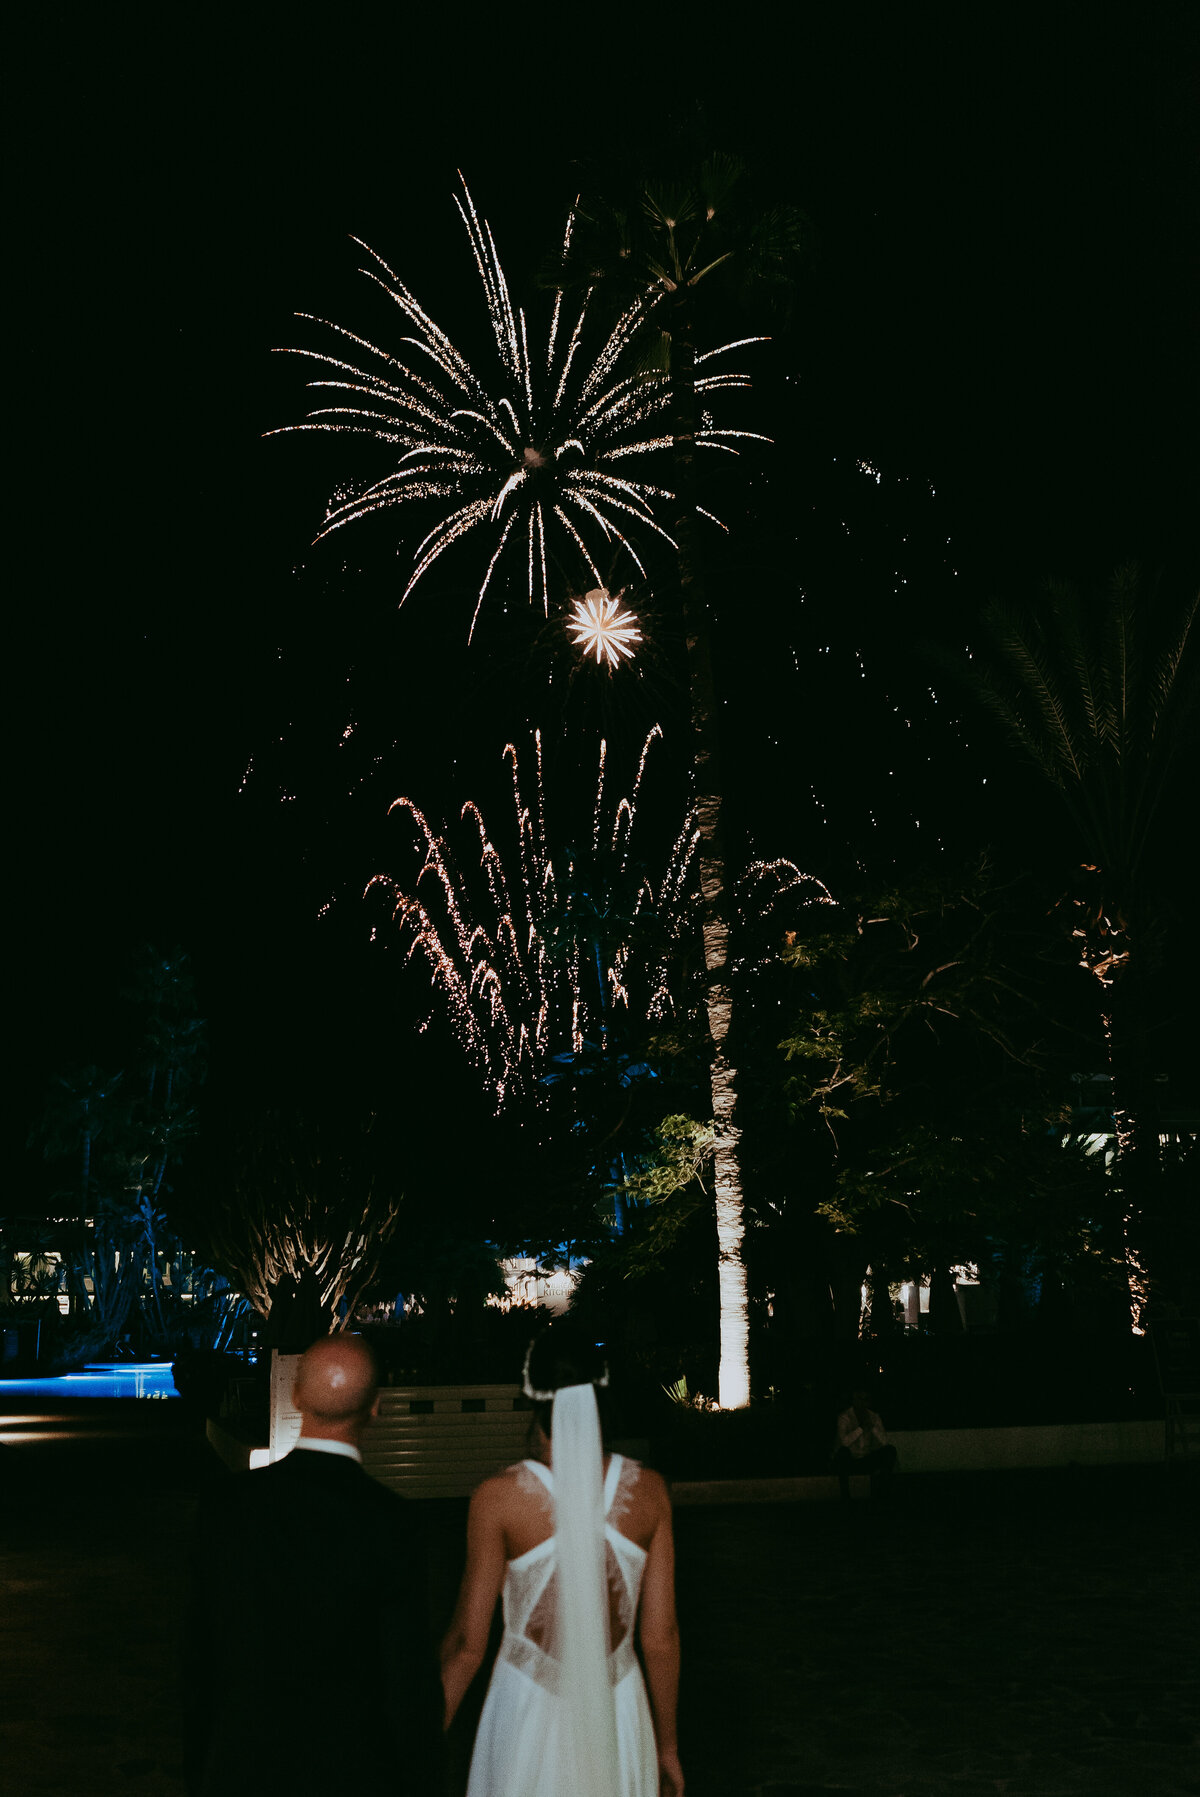 Bride & Groom watching fireworks explode in the dark sky above them